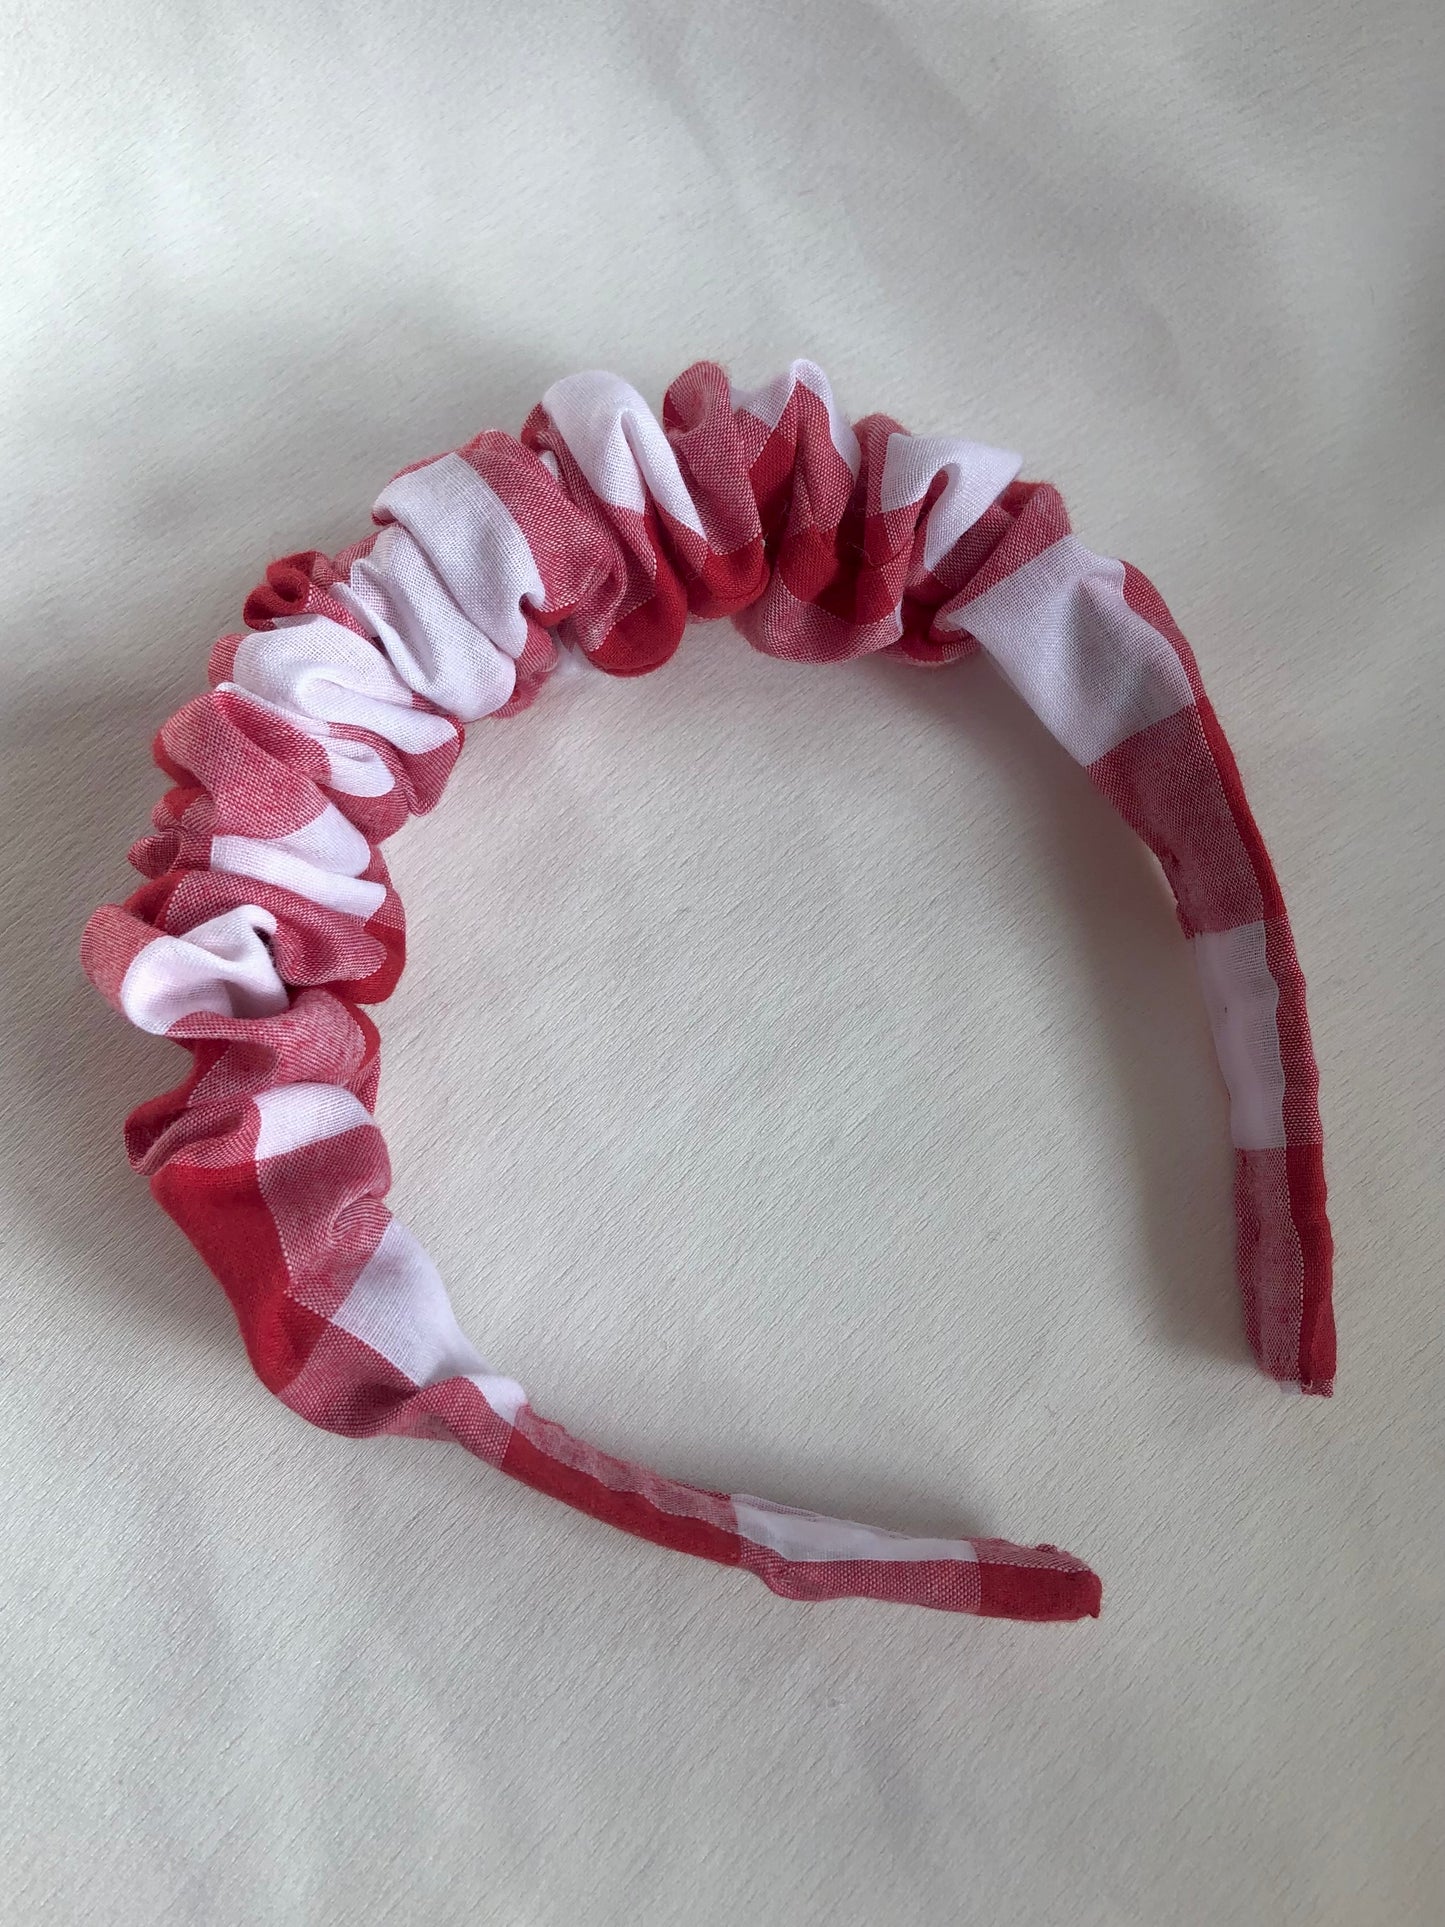 Red large gingham headband - choose style